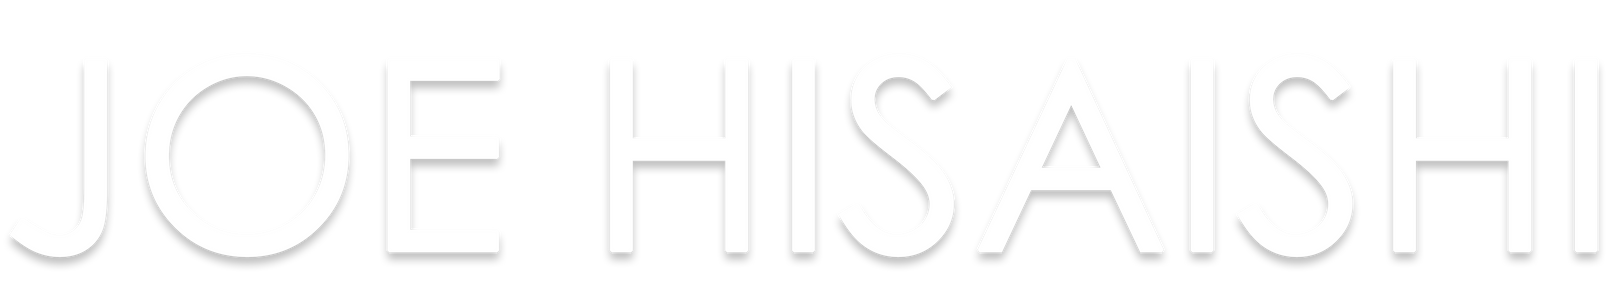 Joe Hisaishi - Songs Of Hope: The Essential Joe Hisaishi Vol. 2 [2 CD] -   Music